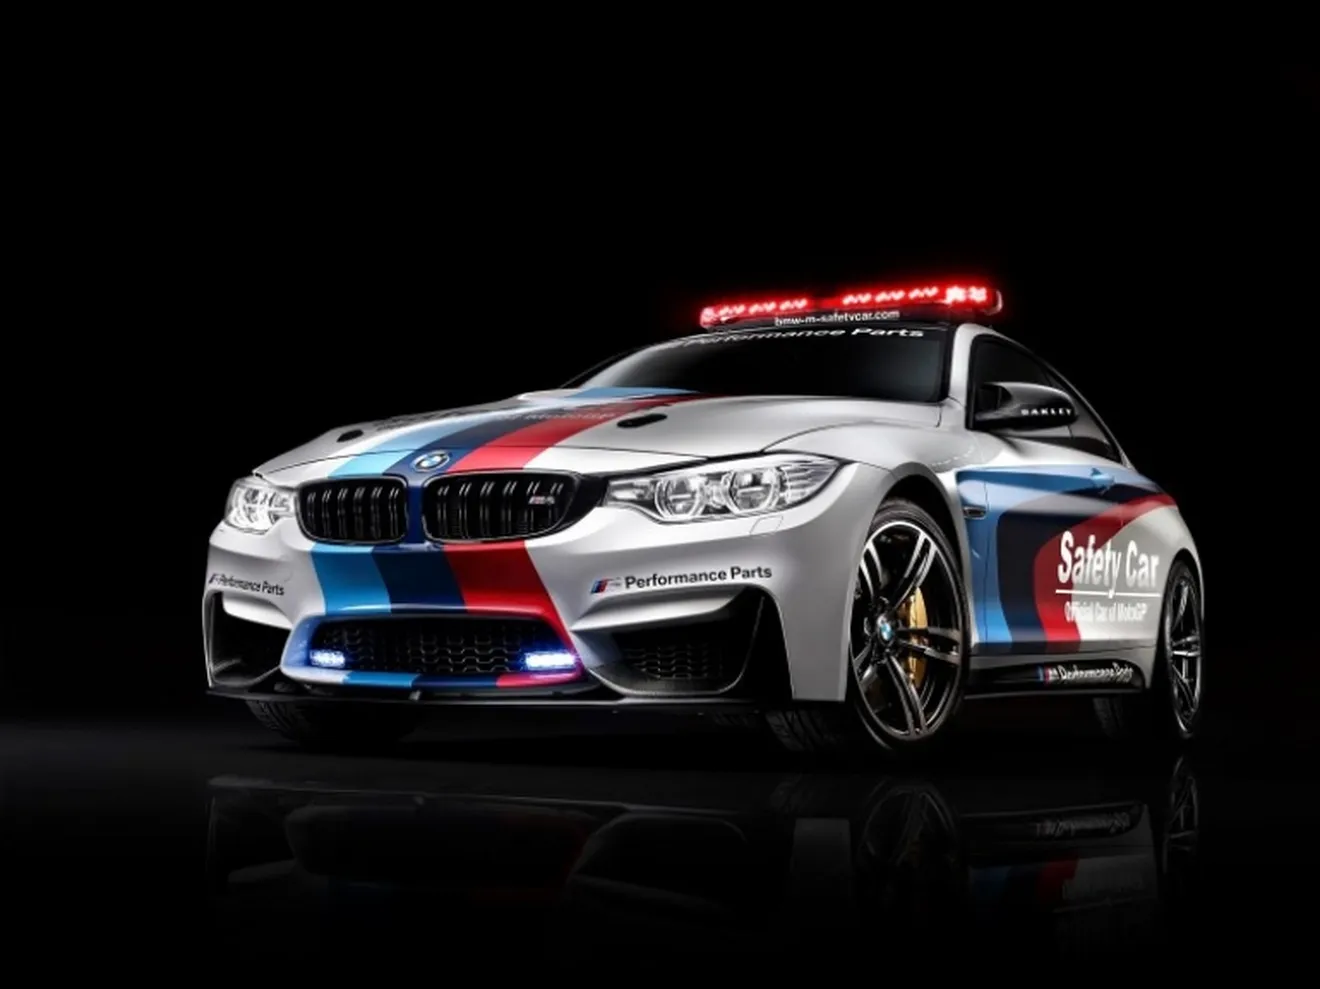 BMW M4 Coupé 2014, nuevo 'Safety Car'